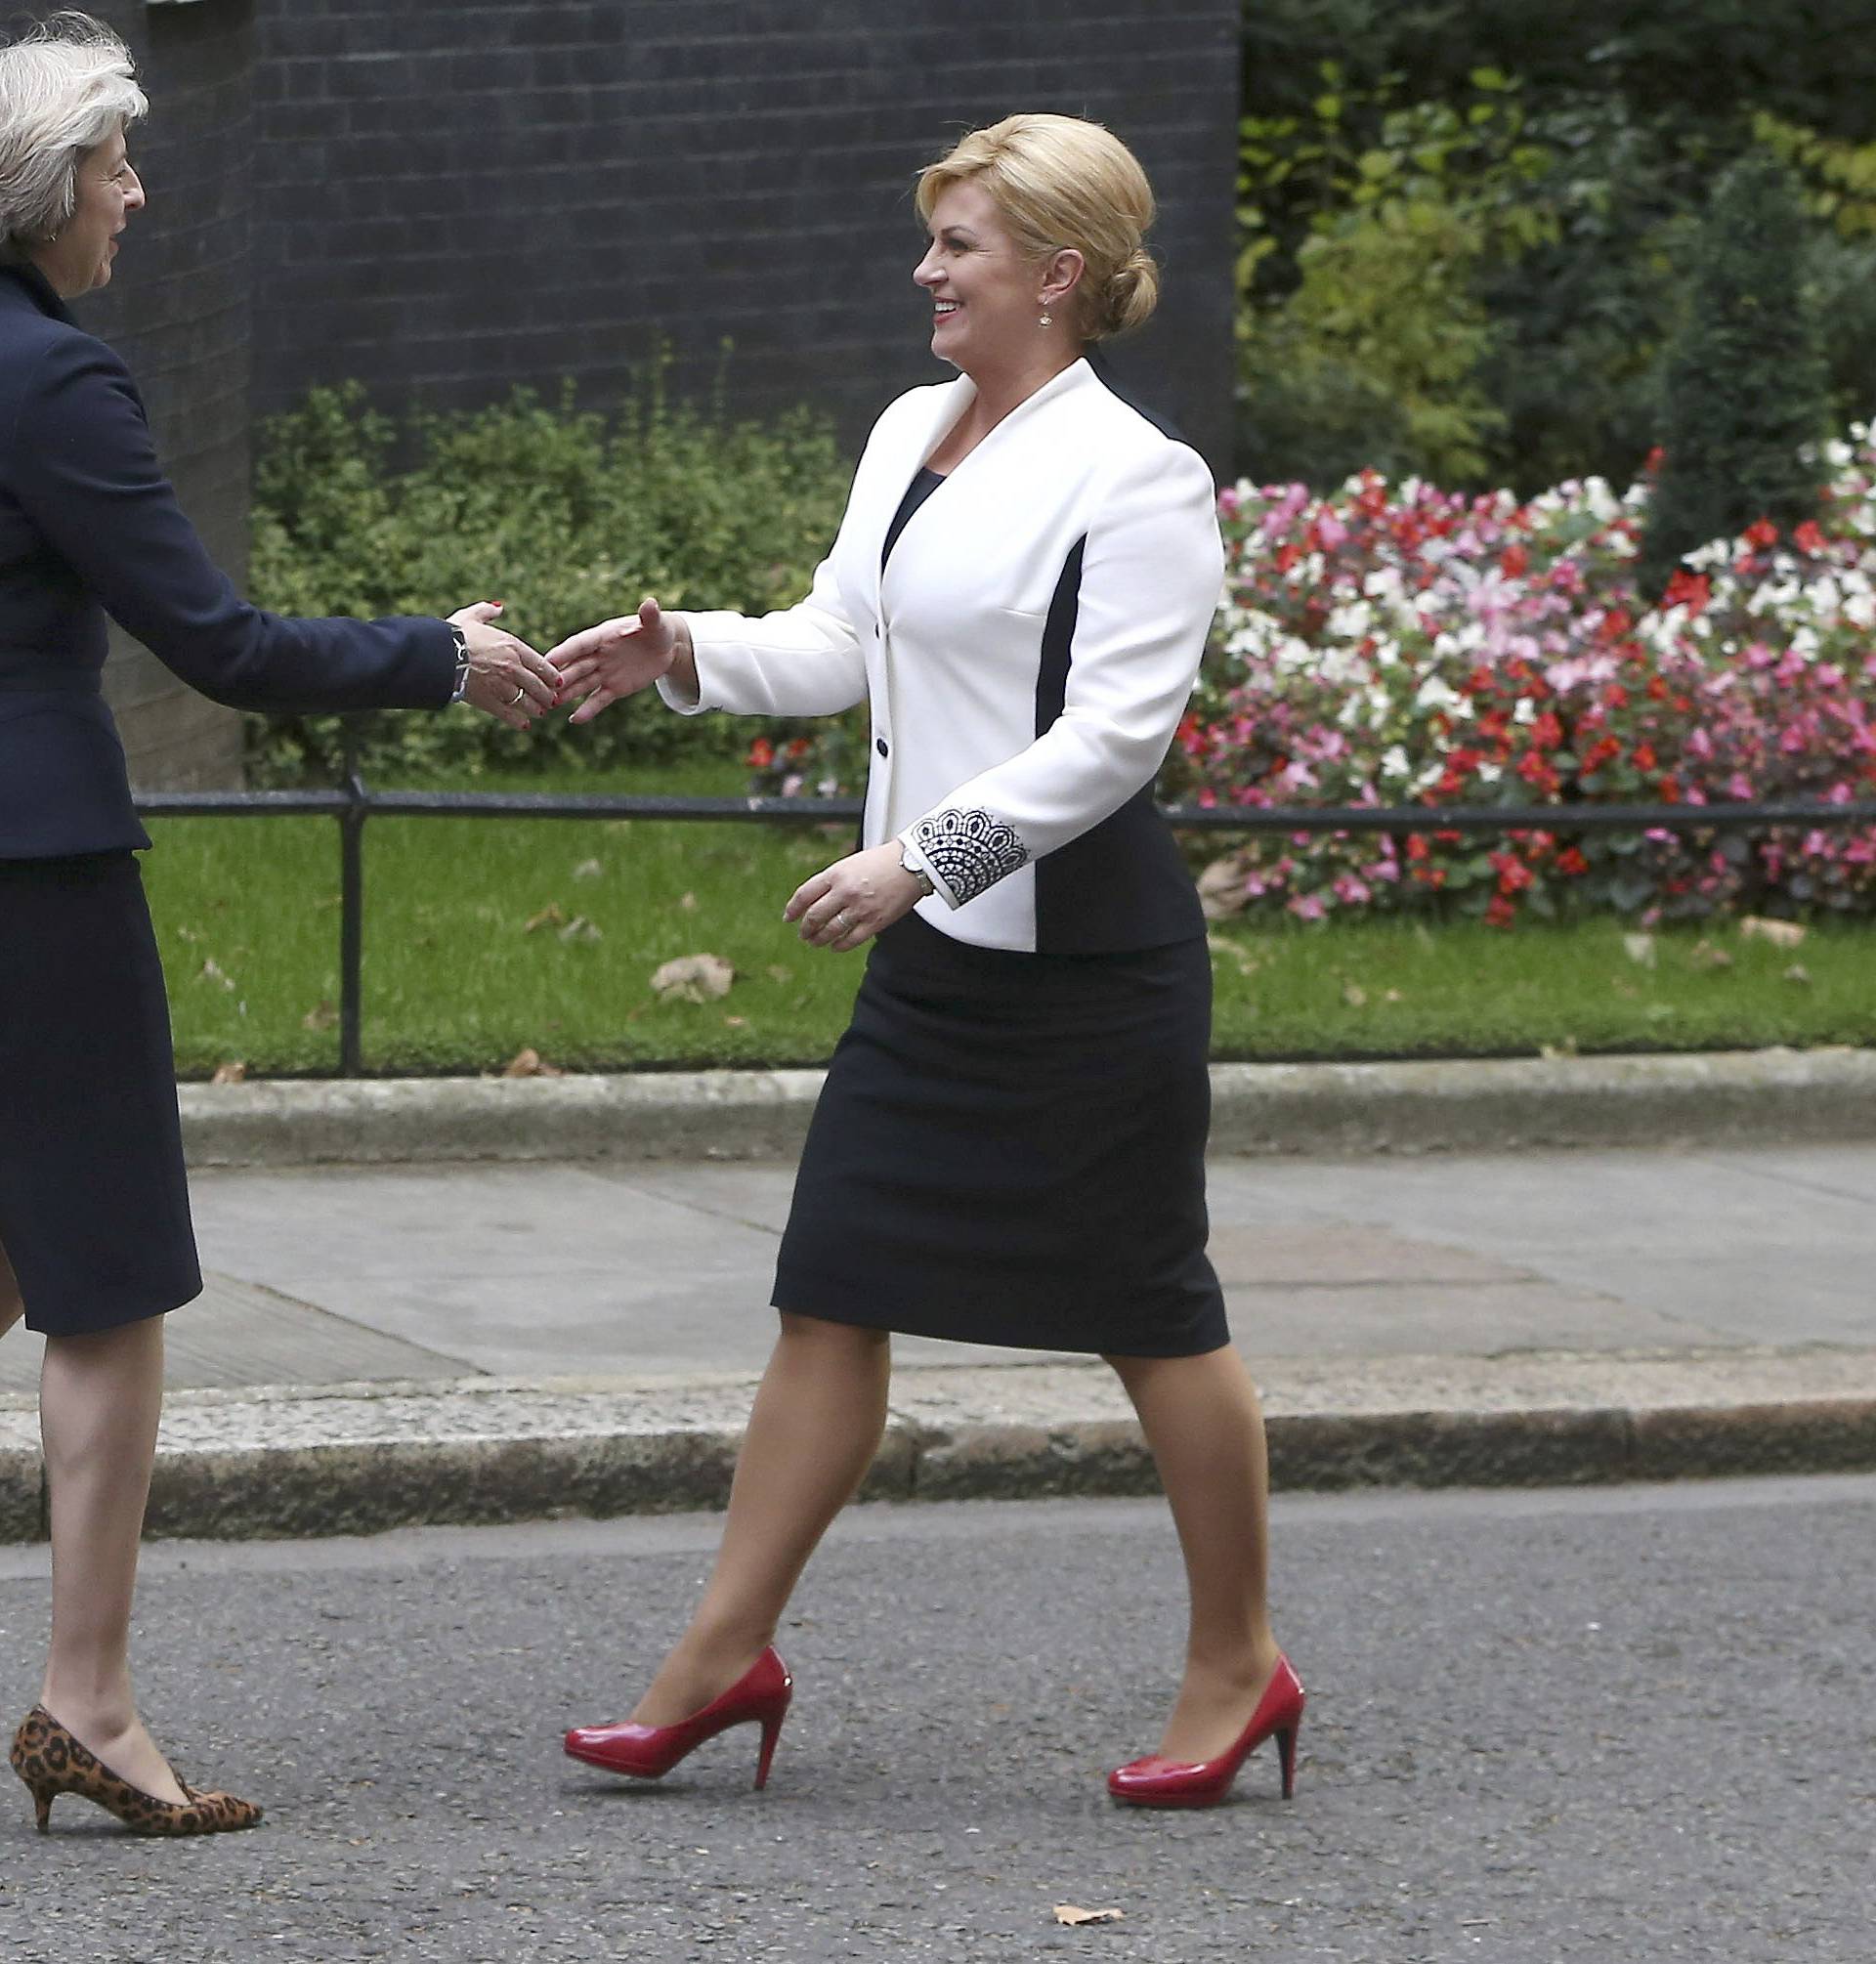 Britain's Prime Minister Theresa May greets Croatia's President Kolinda Grabar-Kitarovic at Downing Street in London